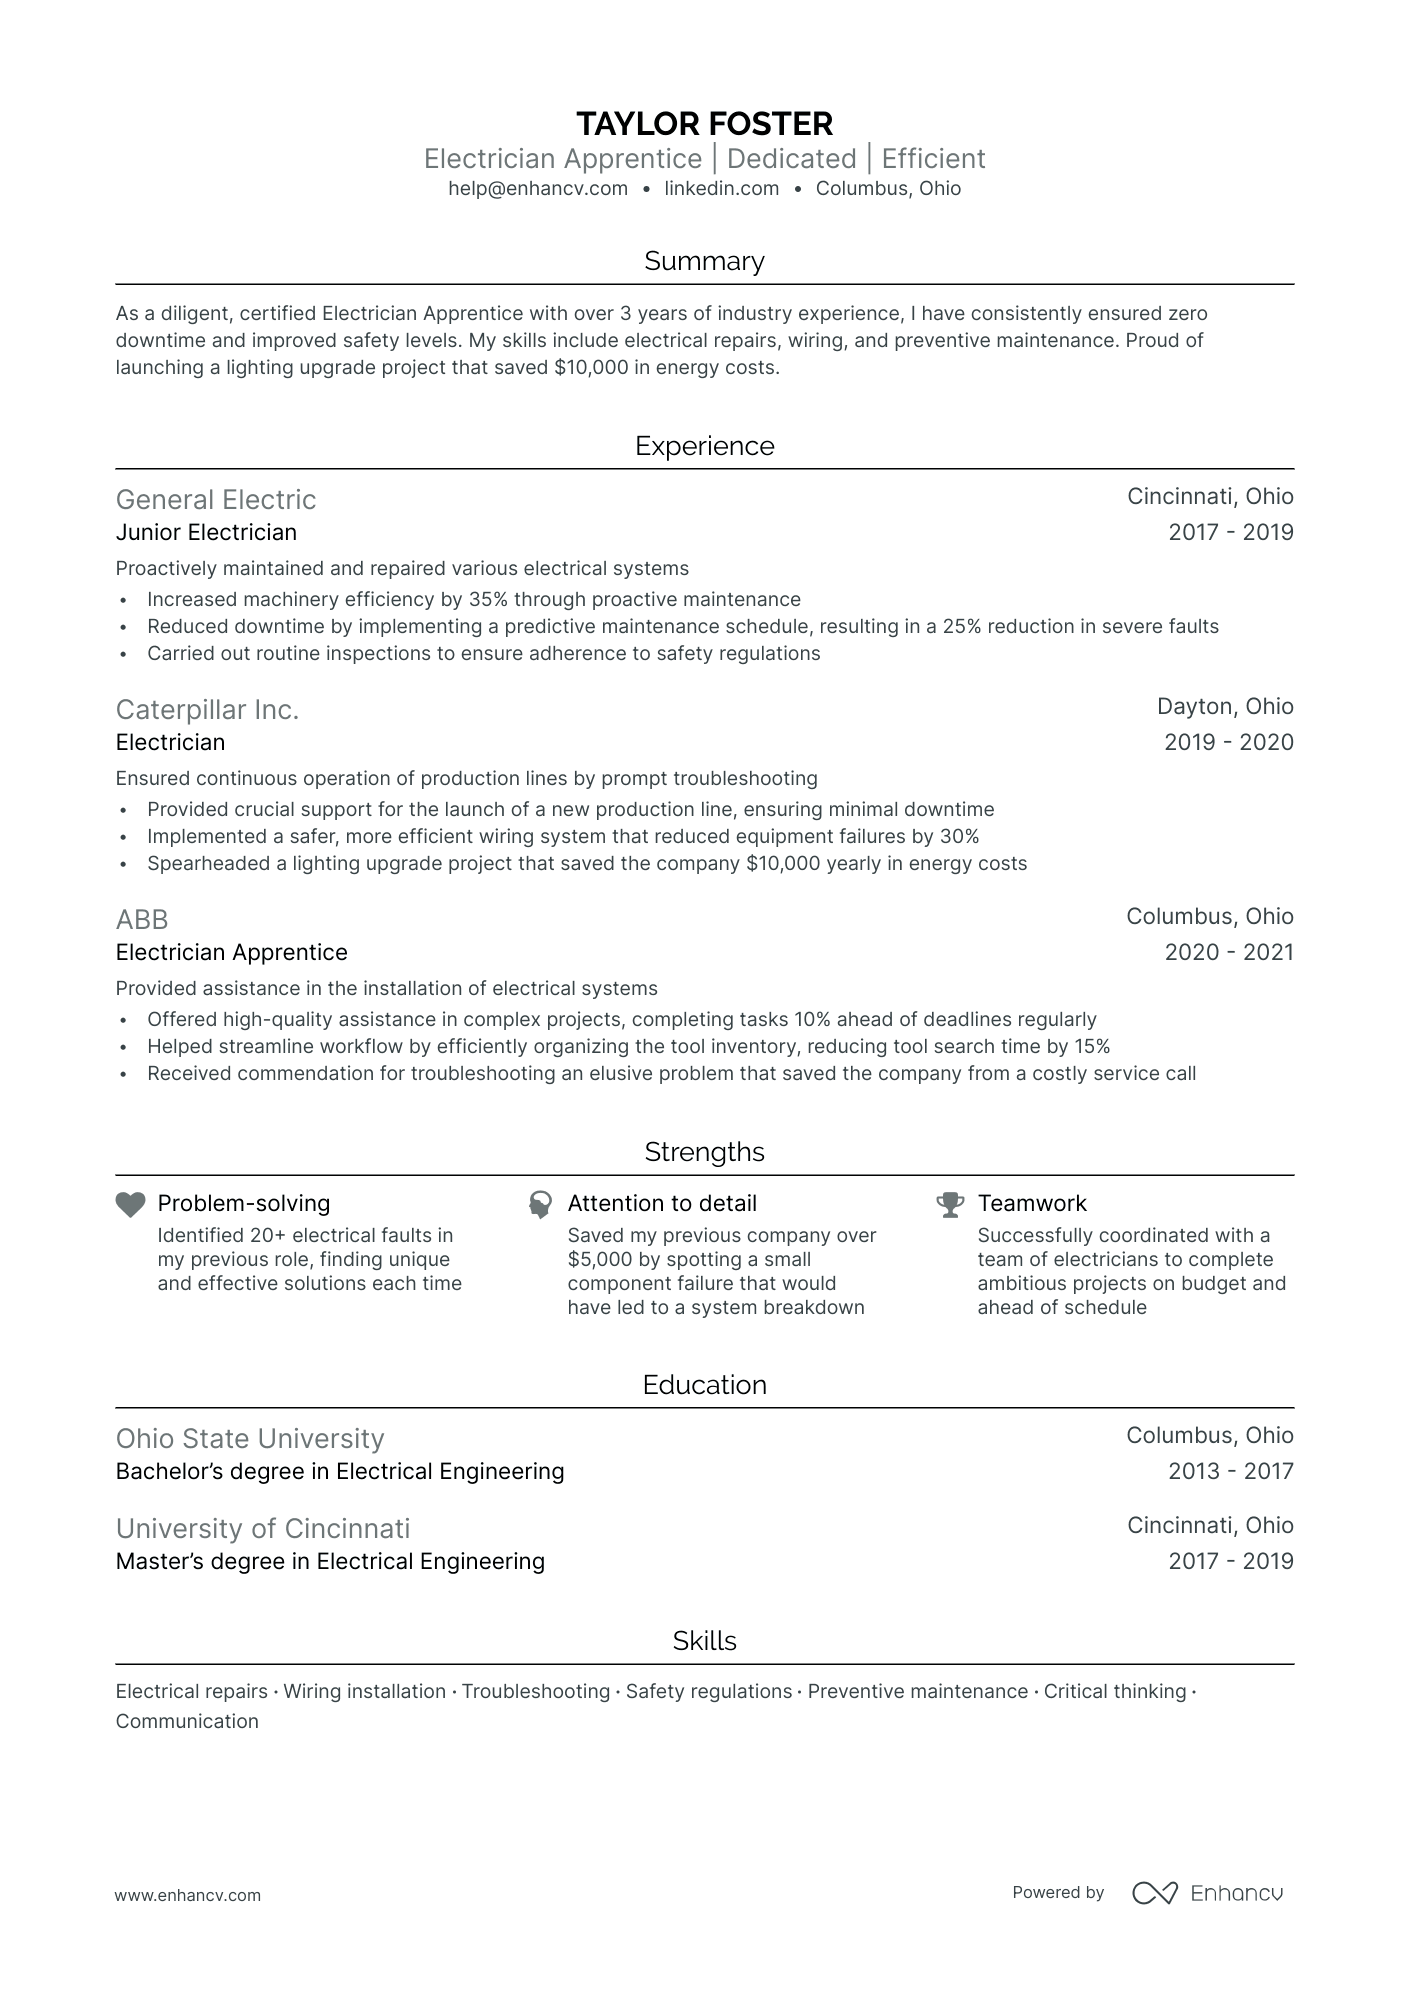 apprentice electrician job description for resume